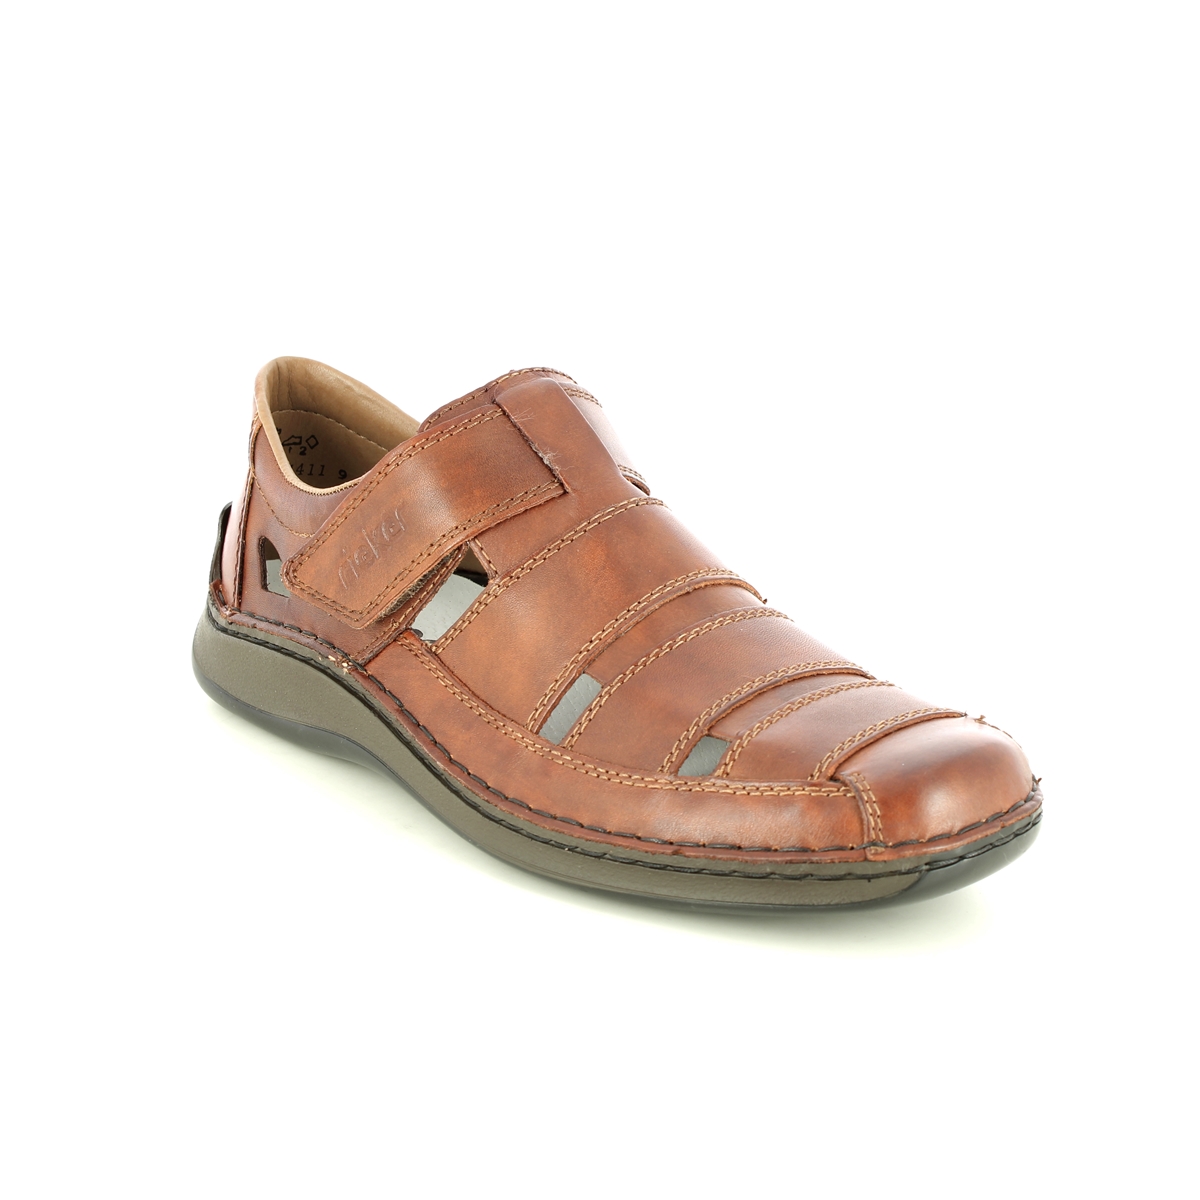 Kip waterval blad Rieker 05278-24 Tan Leather sandals